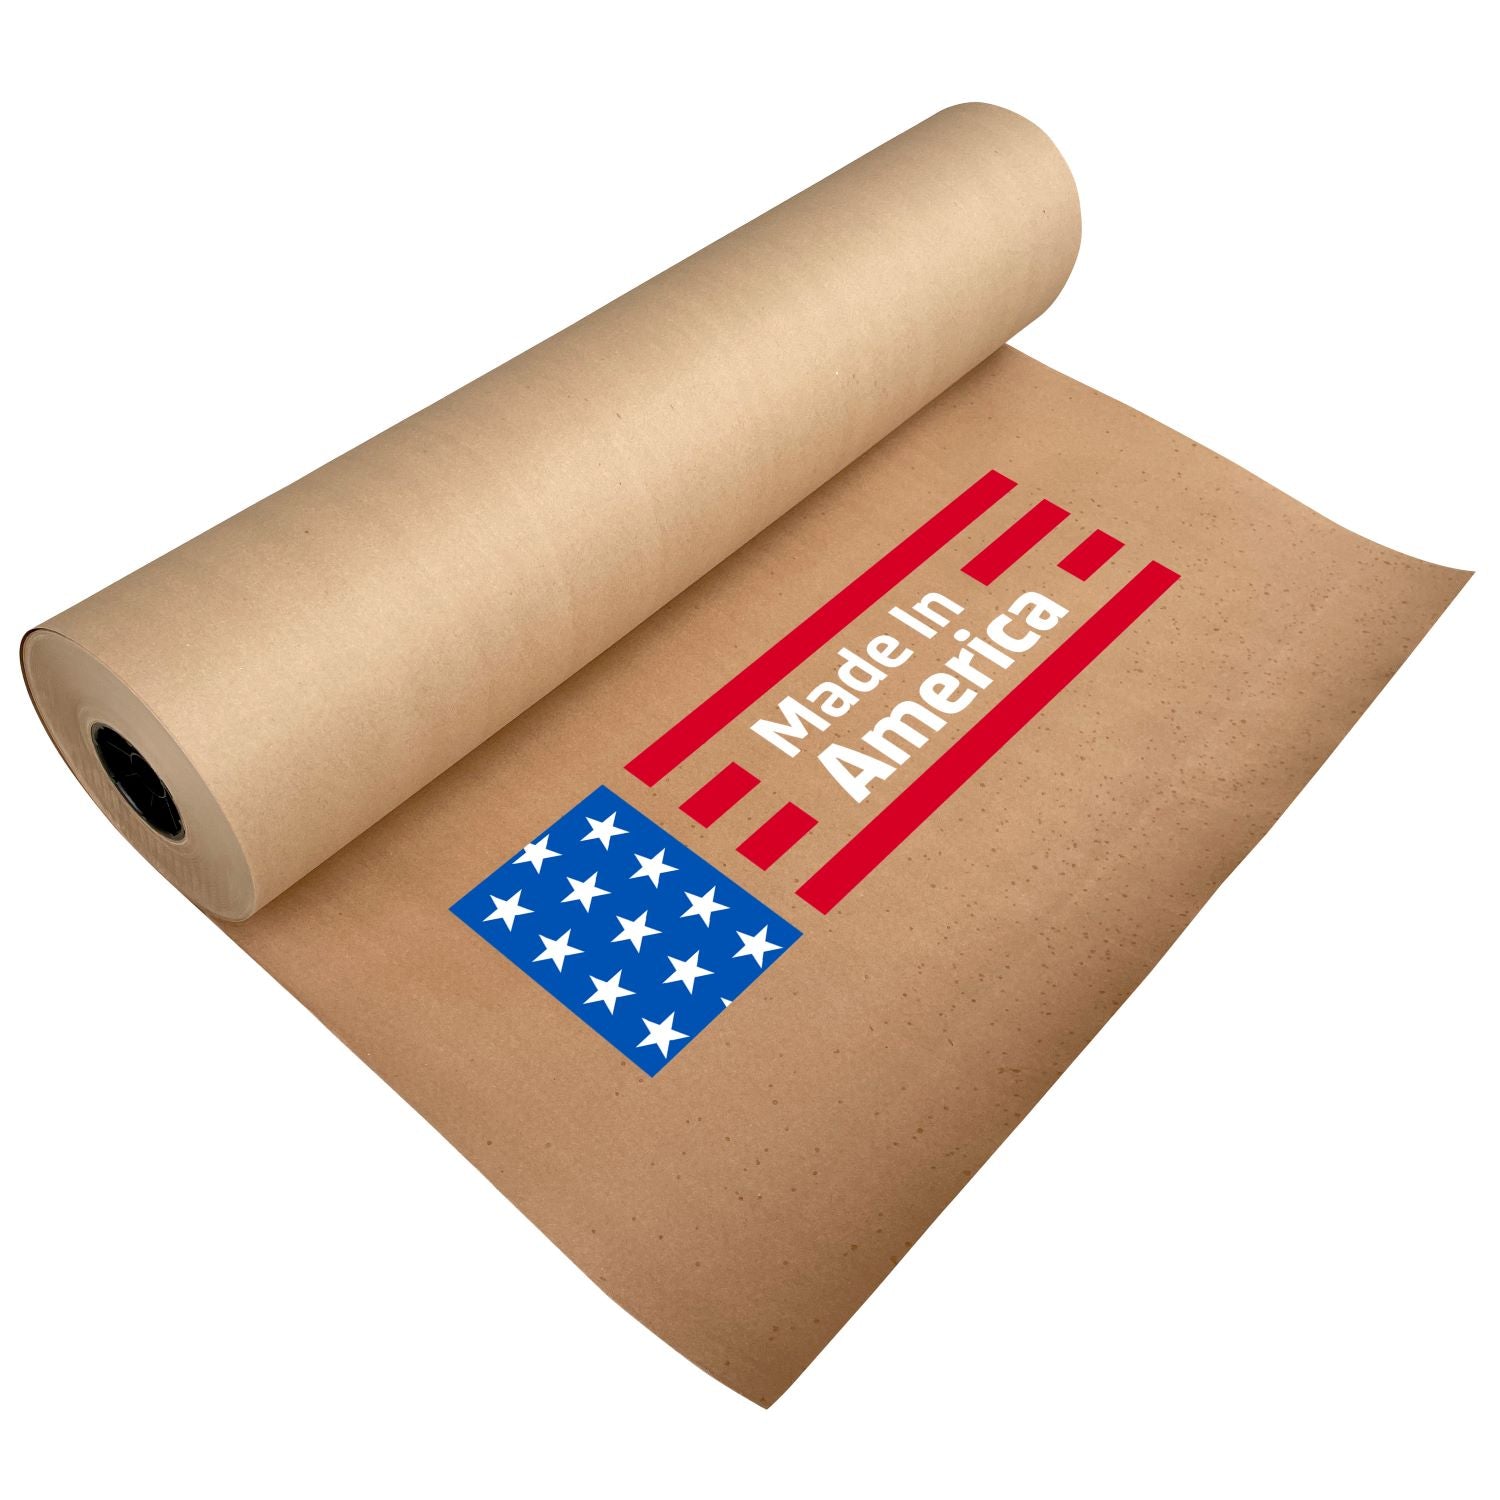 10 x 10 x 38 Long Corrugated Cardboard Boxes (Brown / Kraft) - Sandbaggy